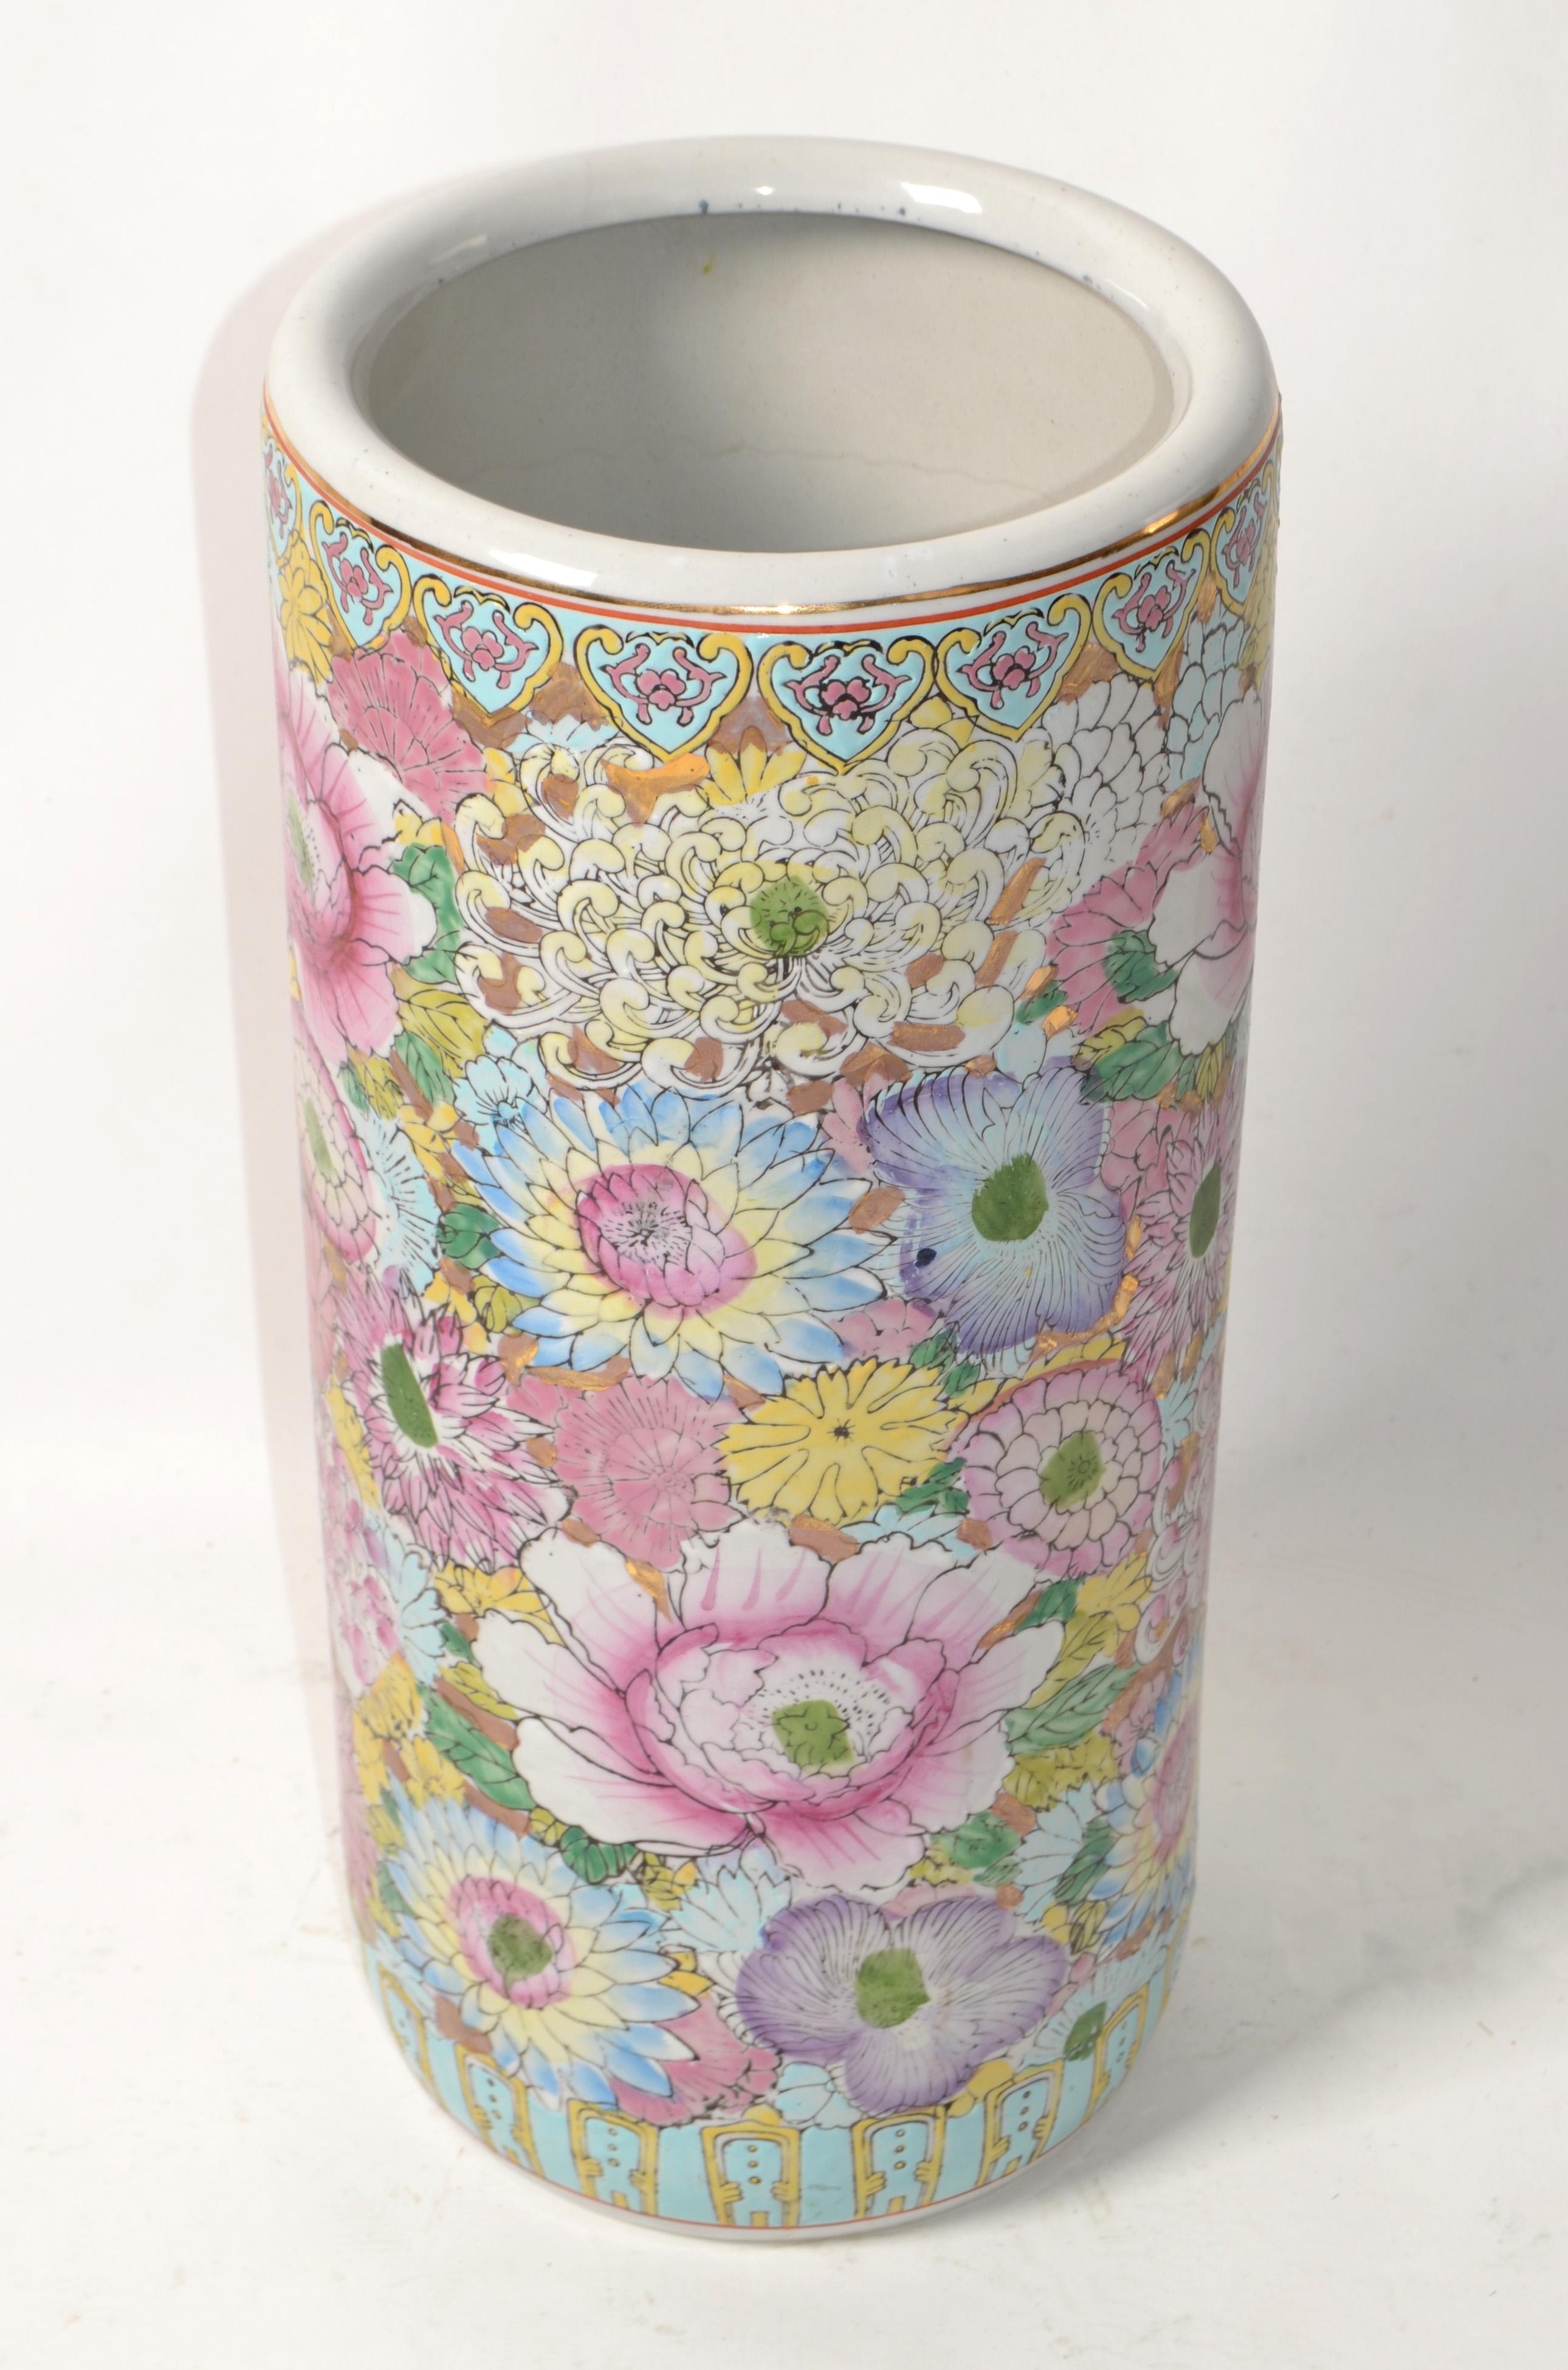 Chinoiserie Style Oriental Handmade Ceramic Pottery Umbrella Stand Vase Vessel In Good Condition For Sale In Miami, FL